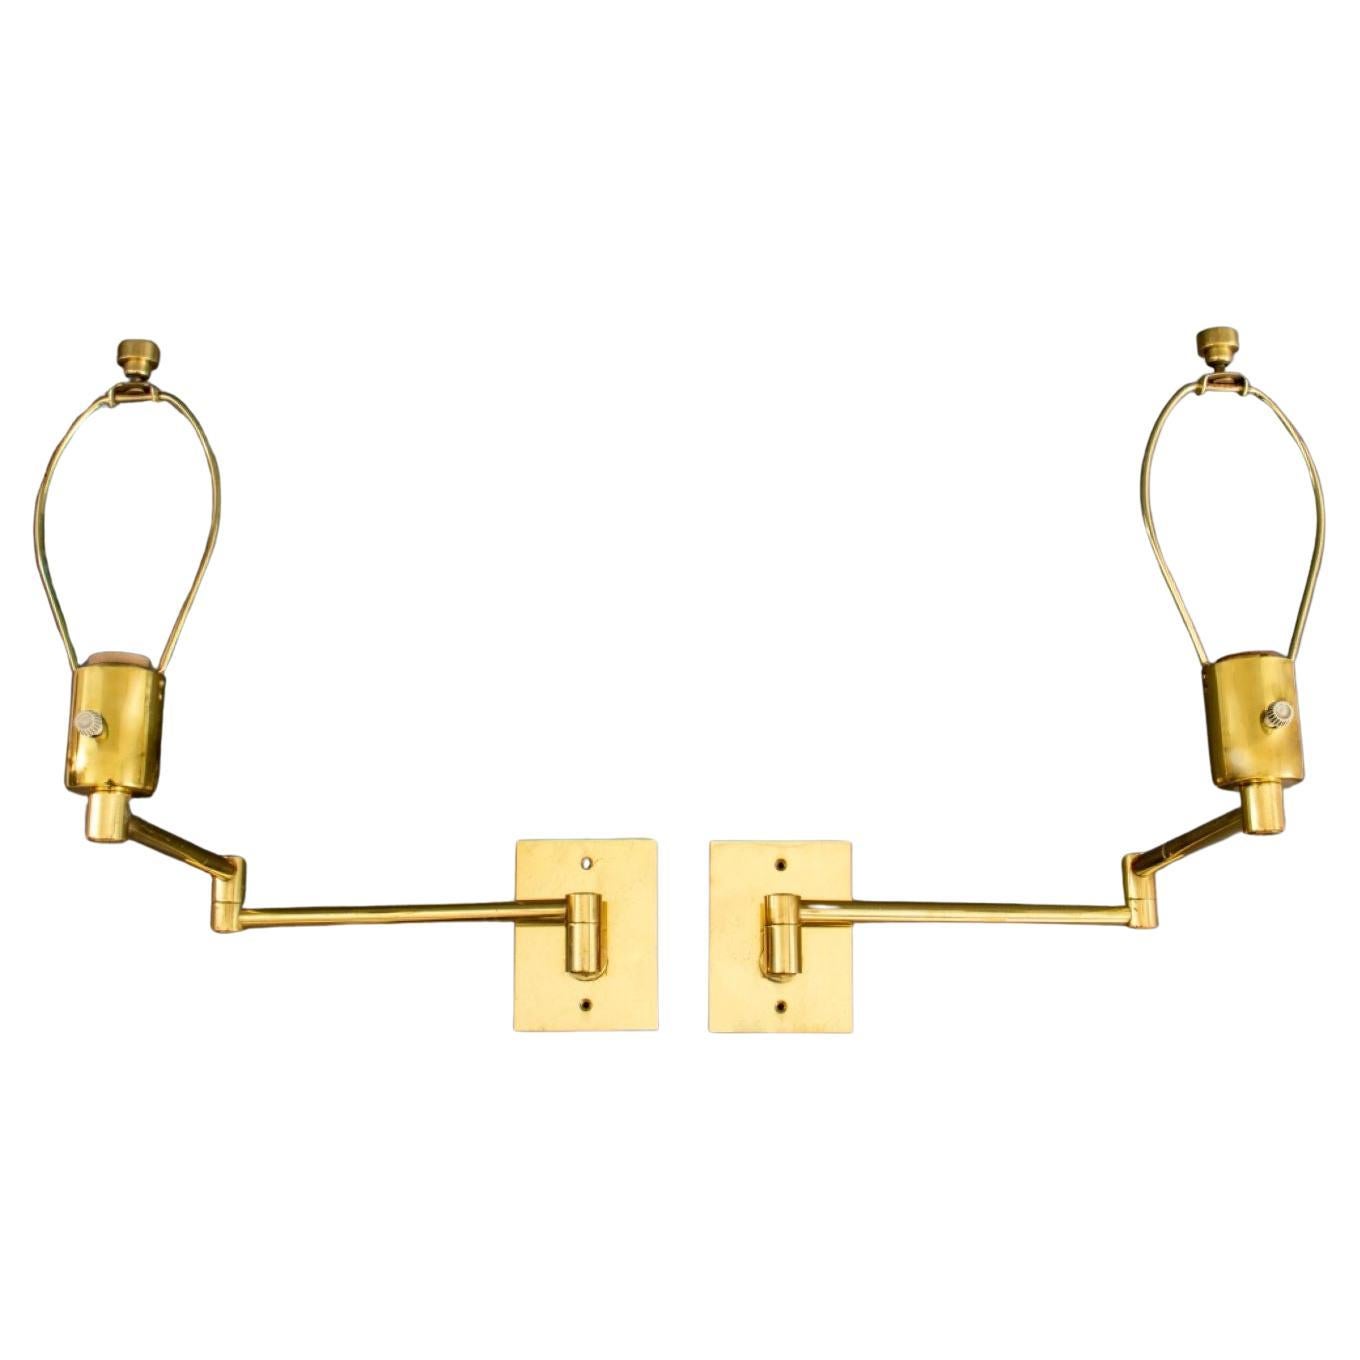 Hansen x Metalarte Brass Swing Arm Lamps, 2 For Sale